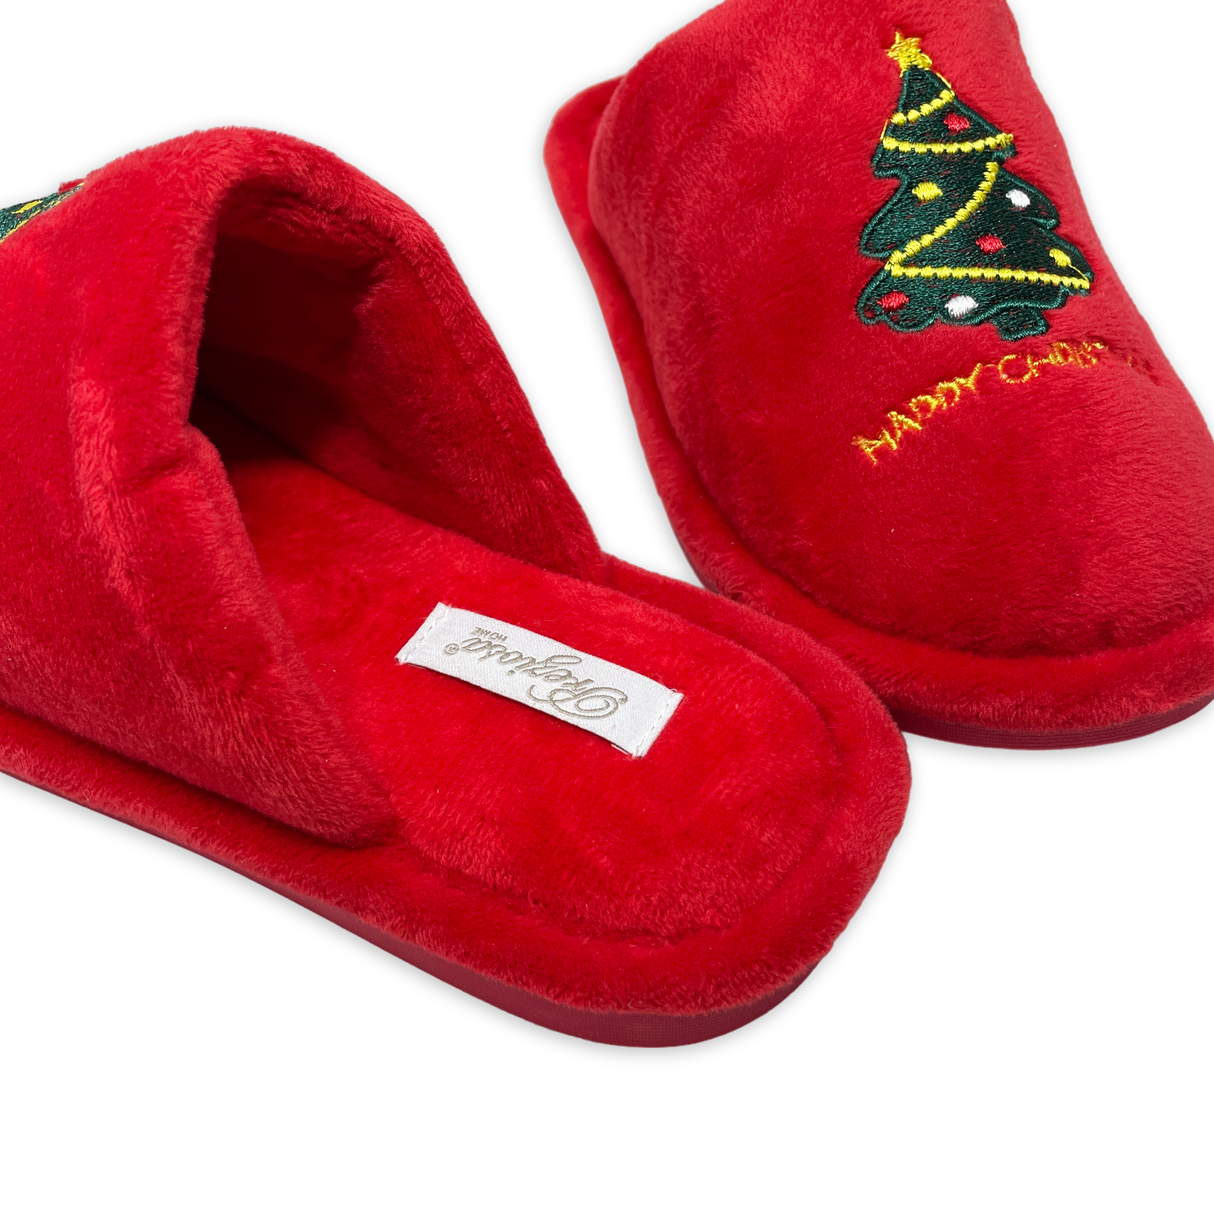 Pantofole Bimbi HAPPY CHRISTMAS By Preziosa Home (Natale)